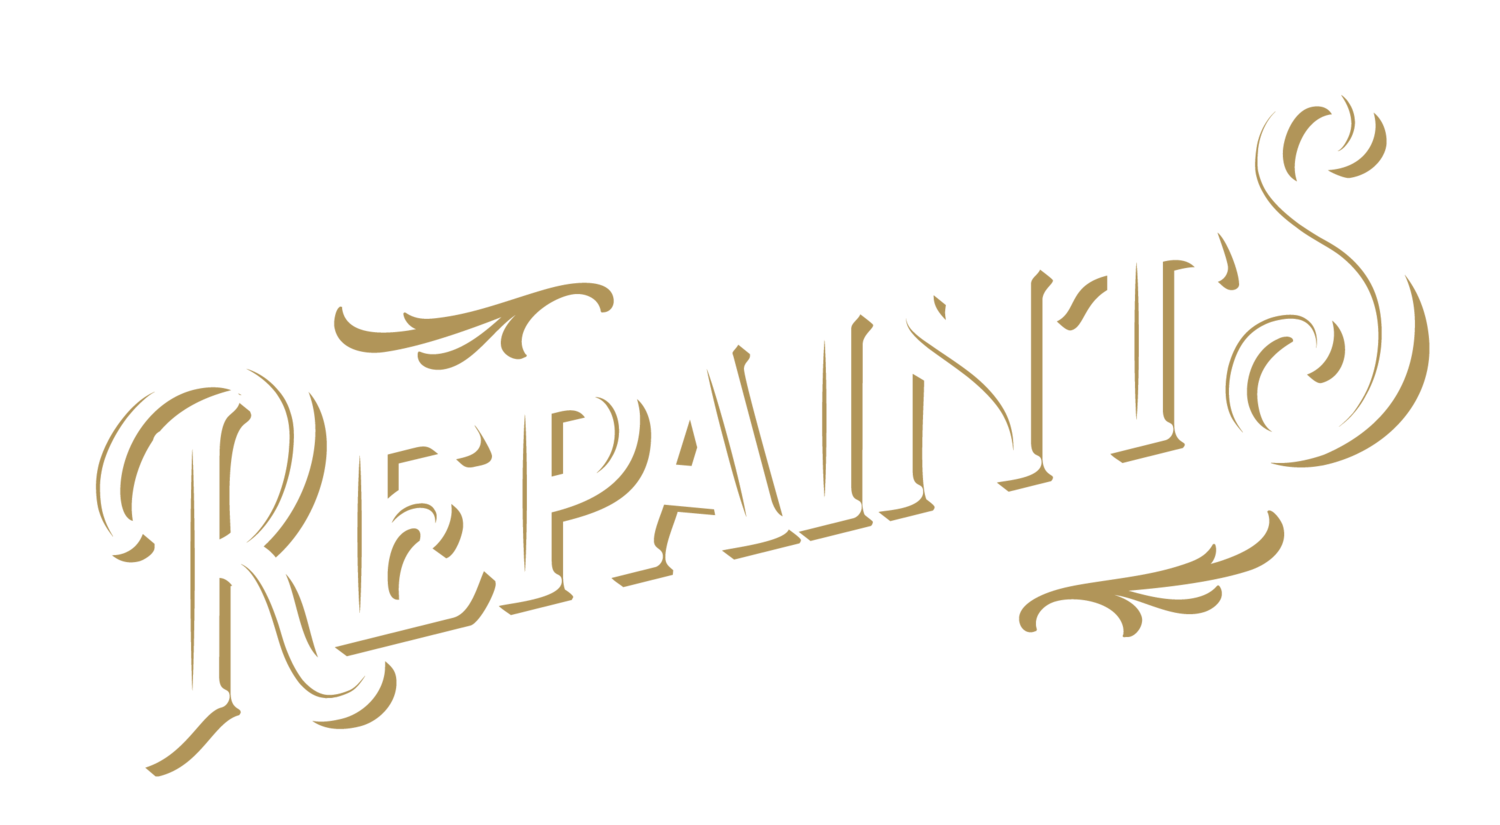 WANAKA REPAINTS - Award winning team specialising in home repaints